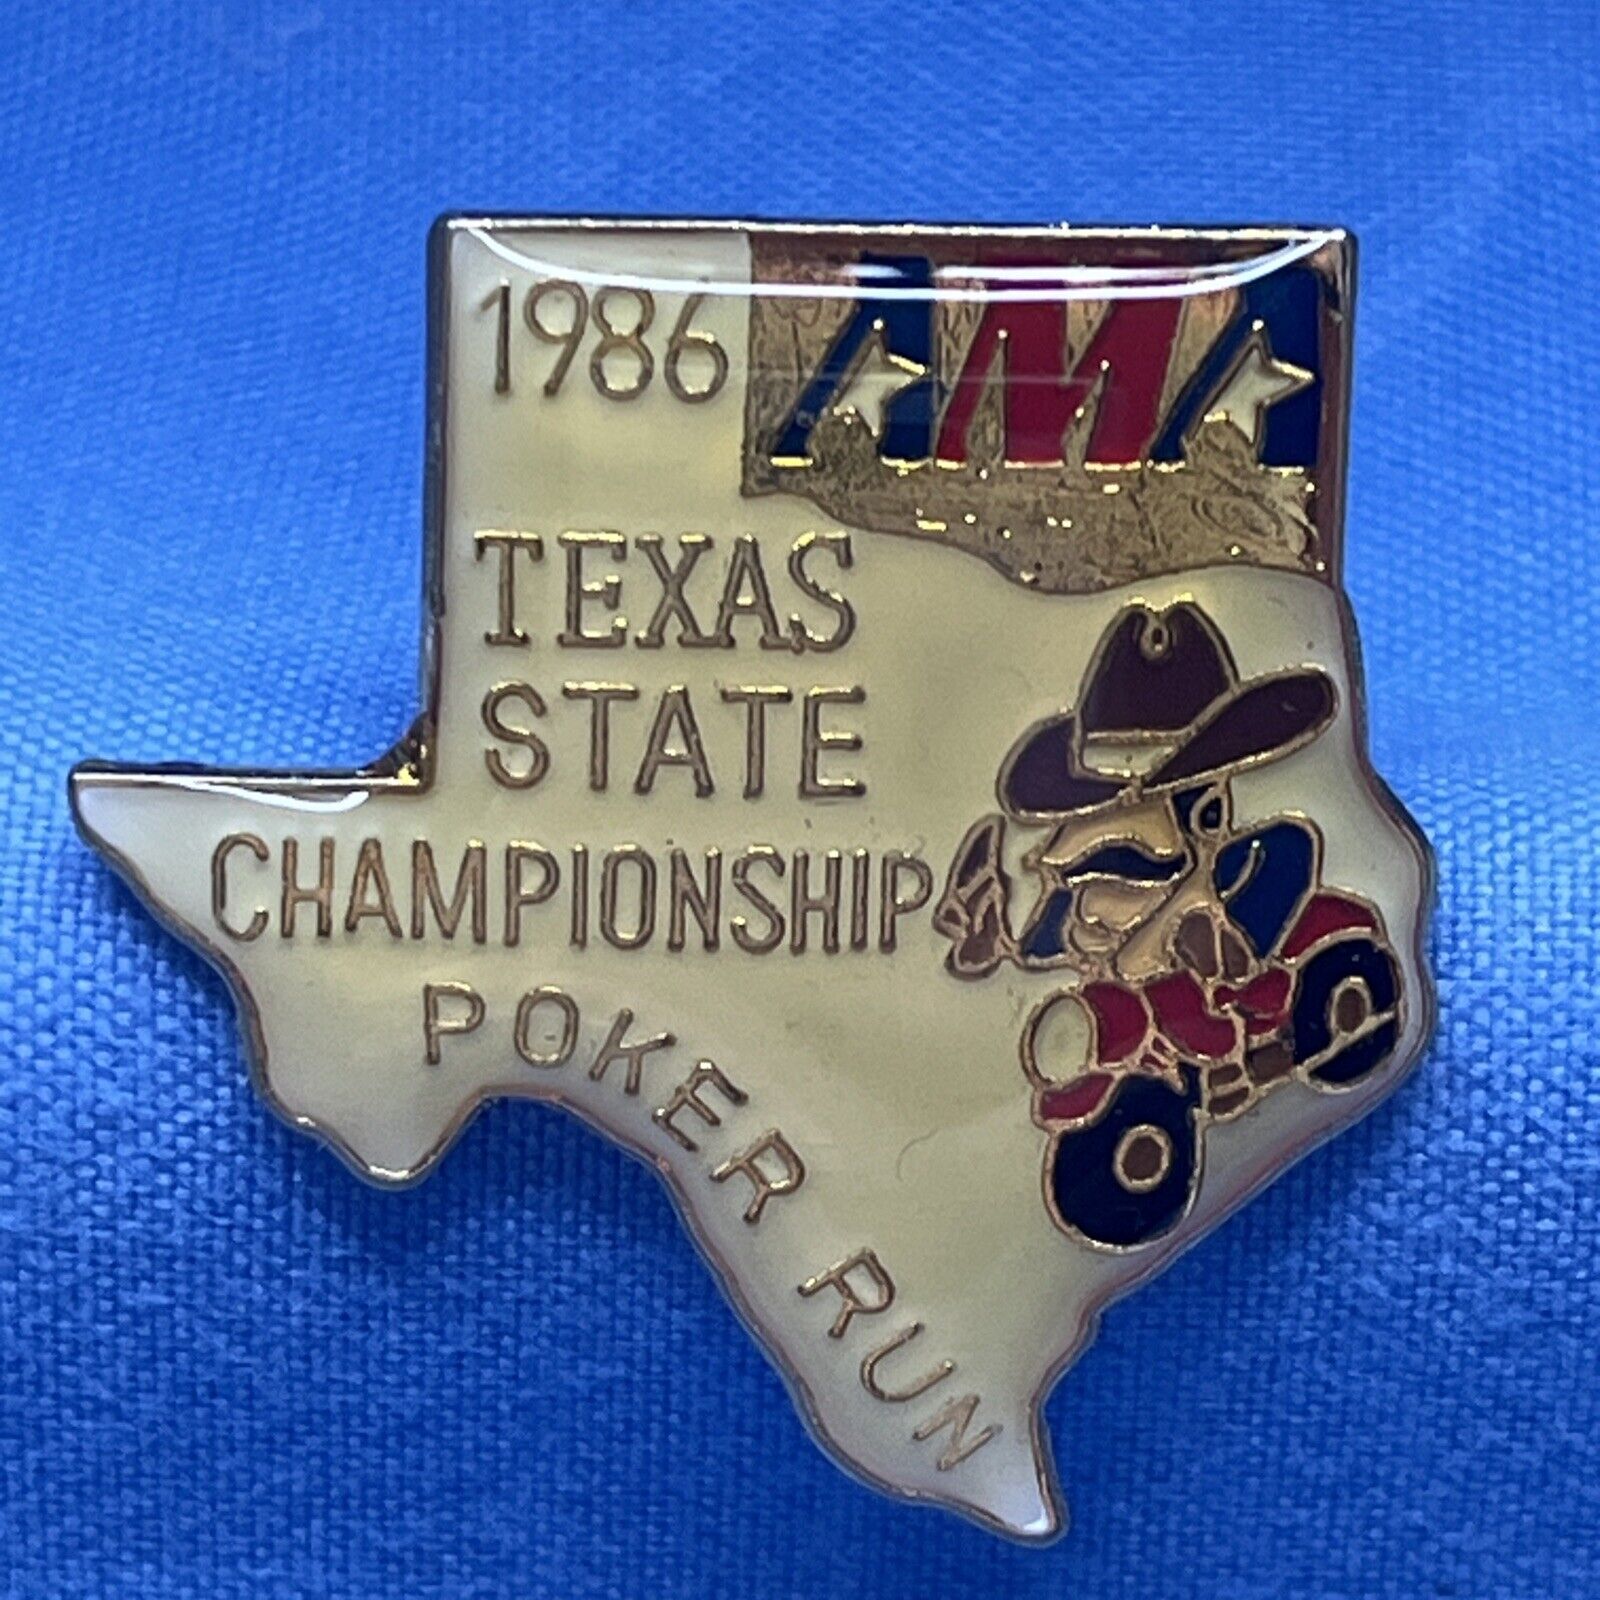 1986 TEXAS STATE NATIONAL CHAMPIONSHIP AMA POKER RUN ENAMEL PIN